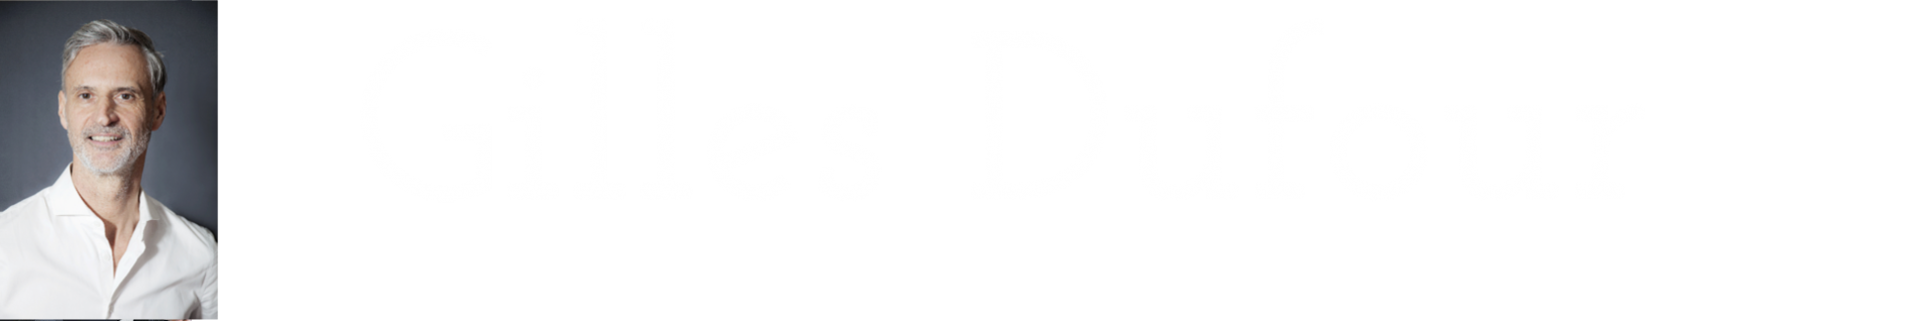 Logo Gilles Dufour